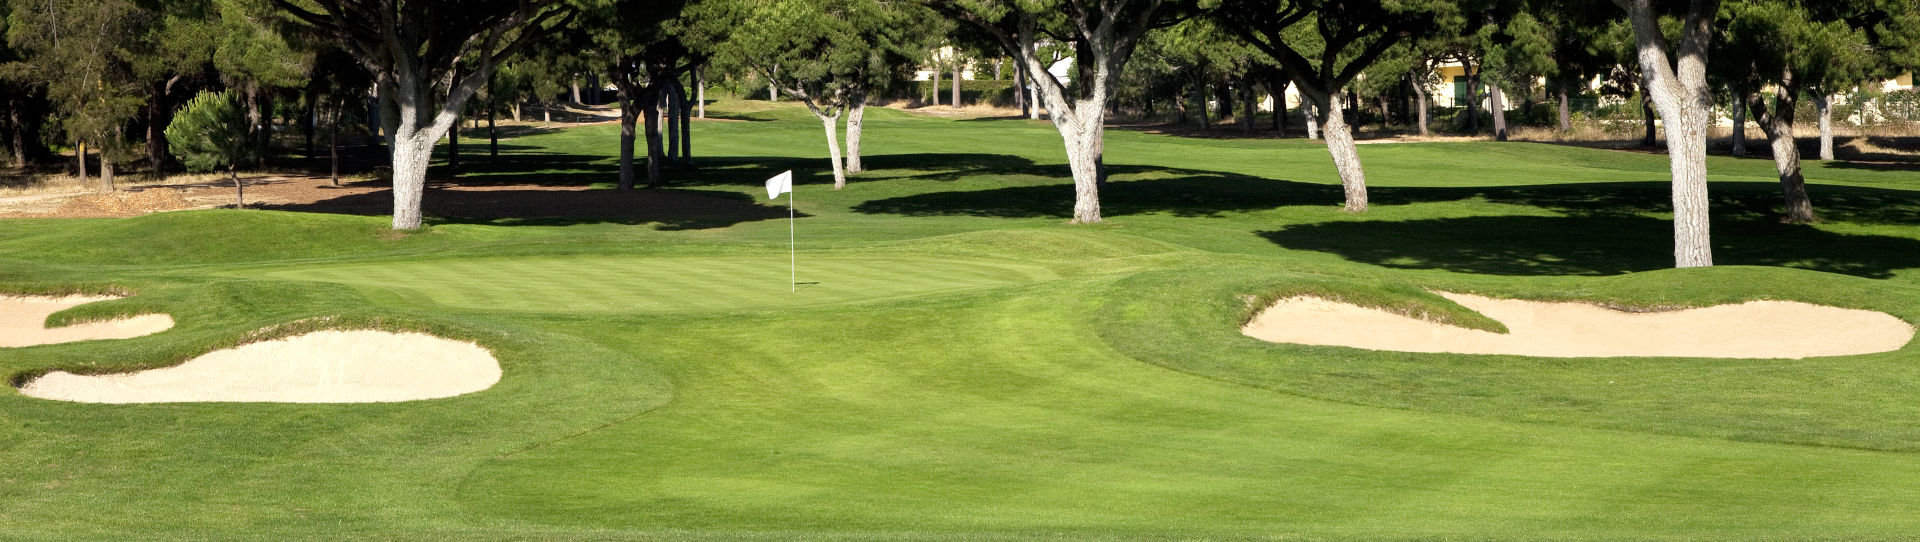 Portugal golf courses - Vilamoura Dom Pedro Pinhal - Photo 1